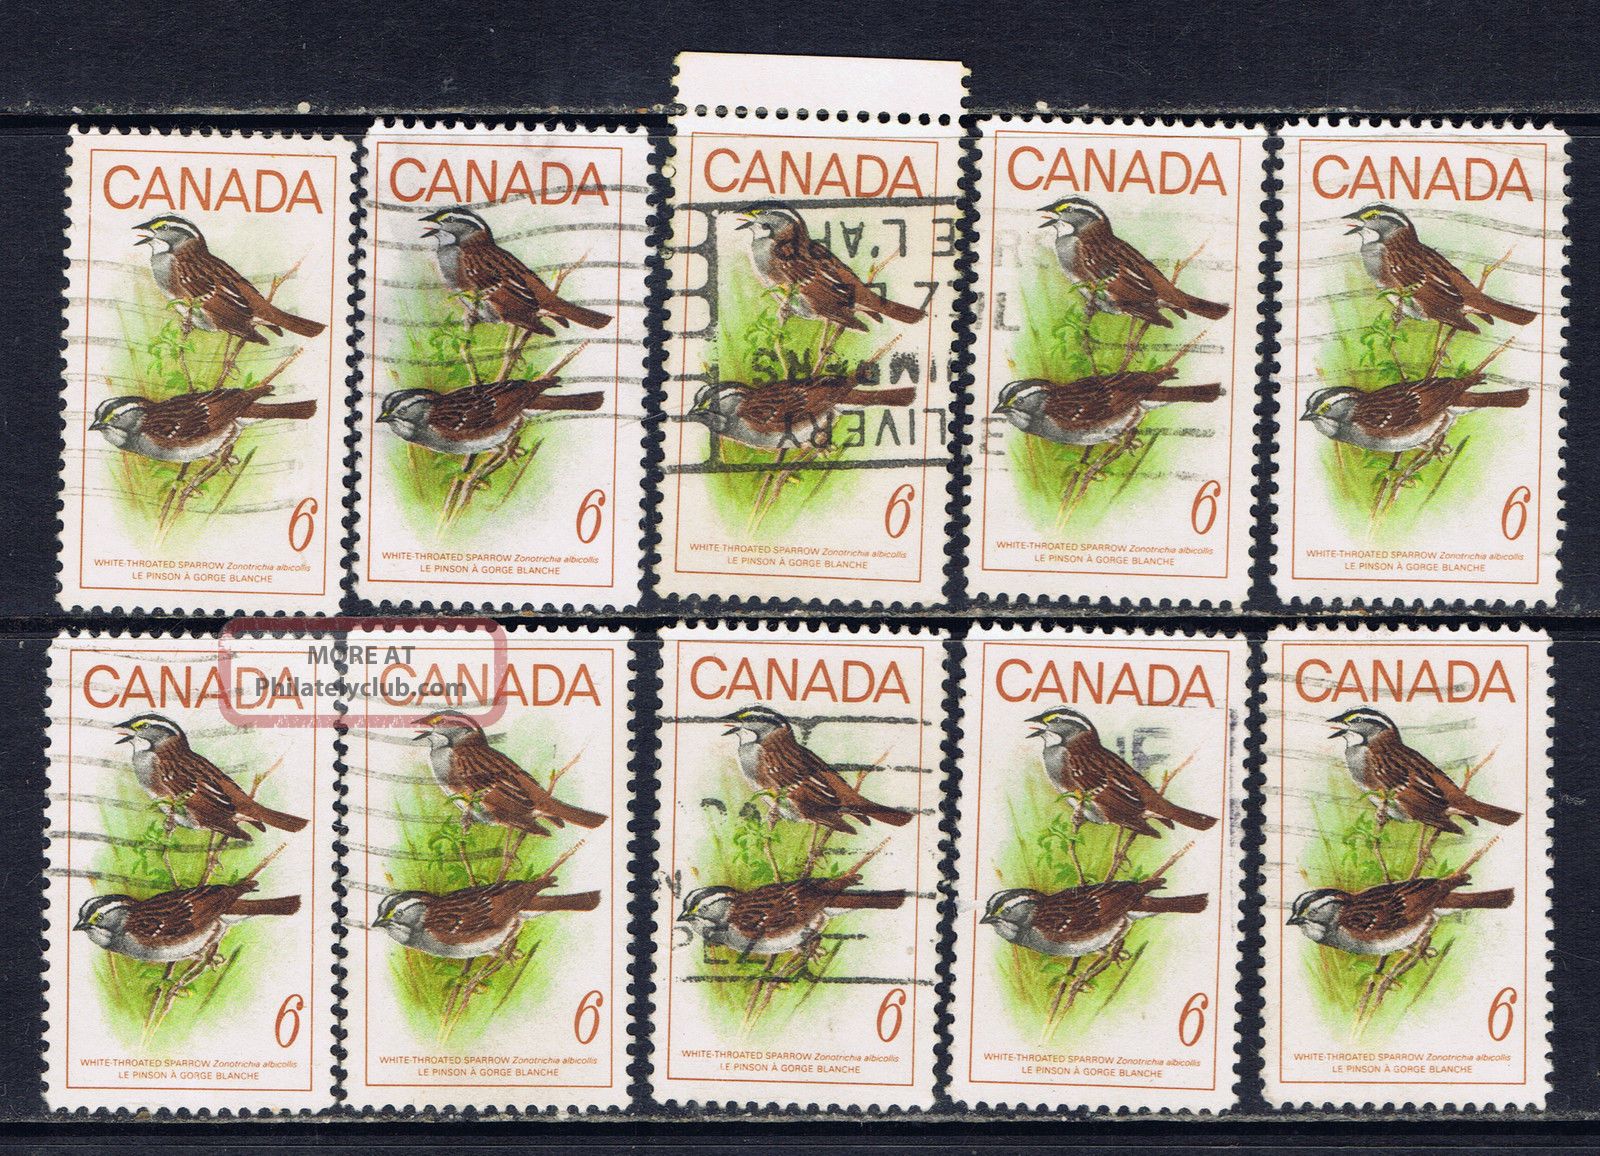 Canada 496 (1) 1969 6 Cent Canadian Birds - White - Throated Sparrow 10 Canada photo